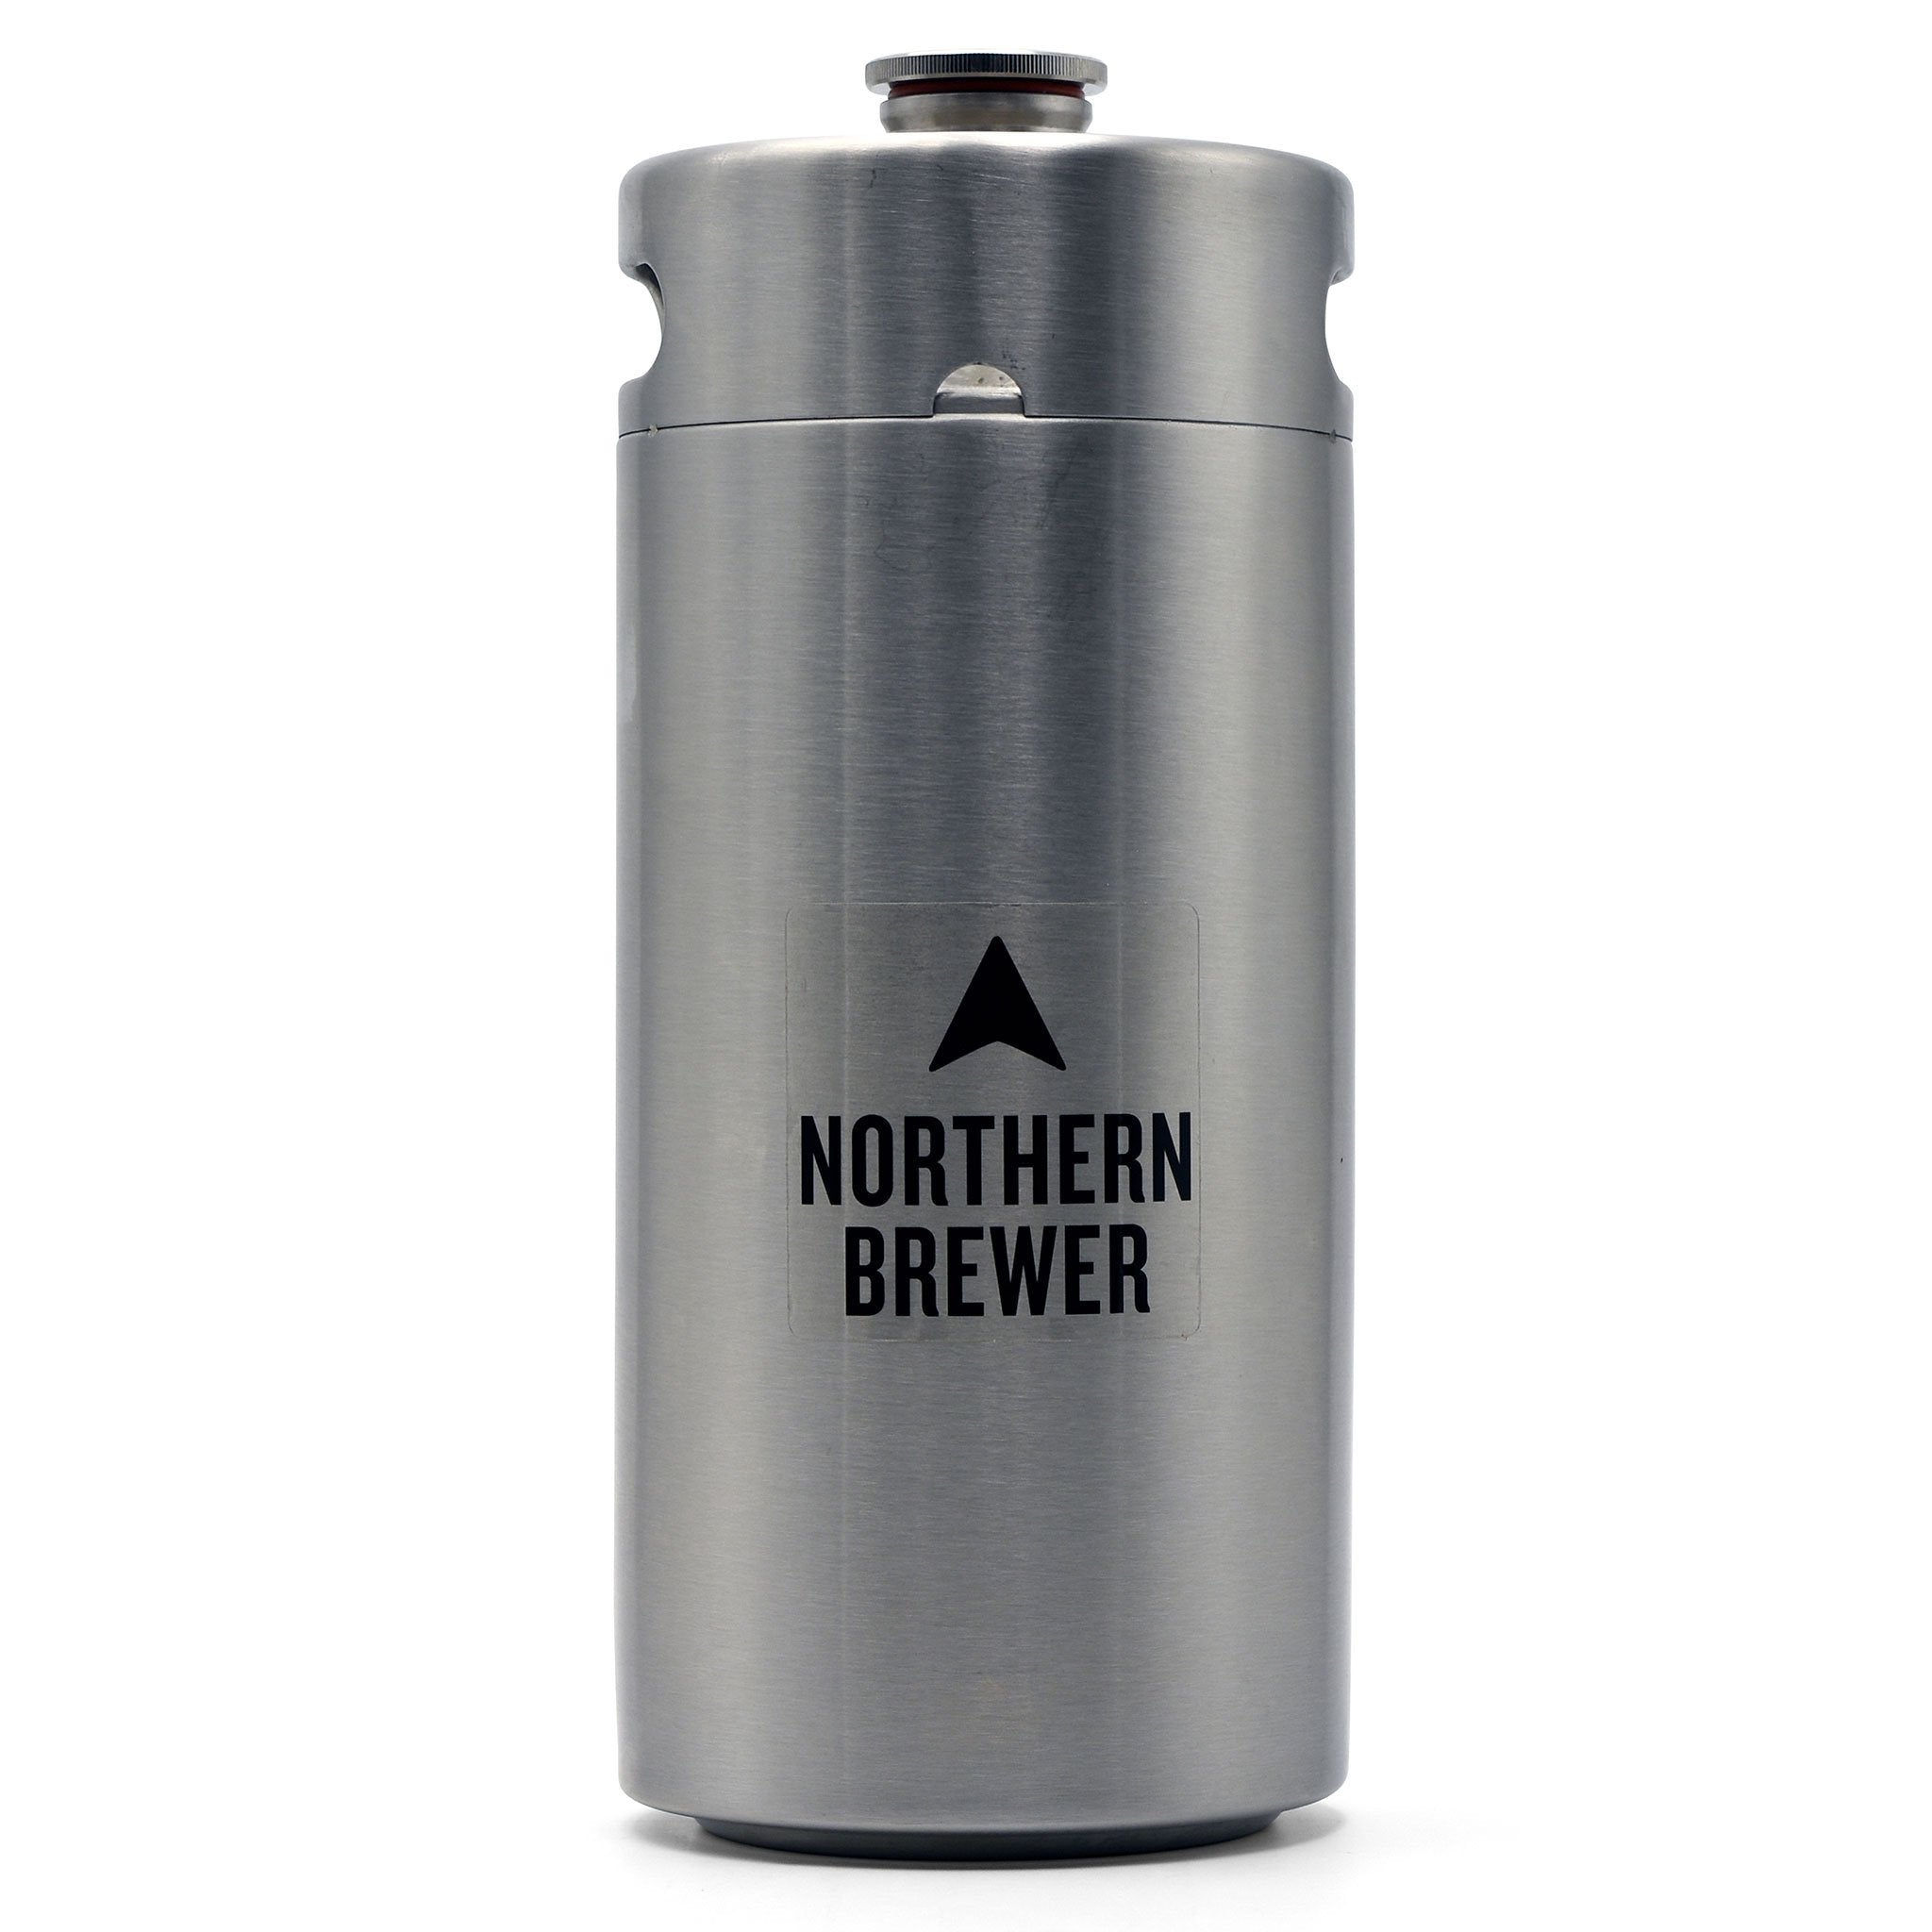 2 Pack NEW 5 Gallon Ball Lock Kegs for Homebrew Beer Soda Coffee Nitro Brew